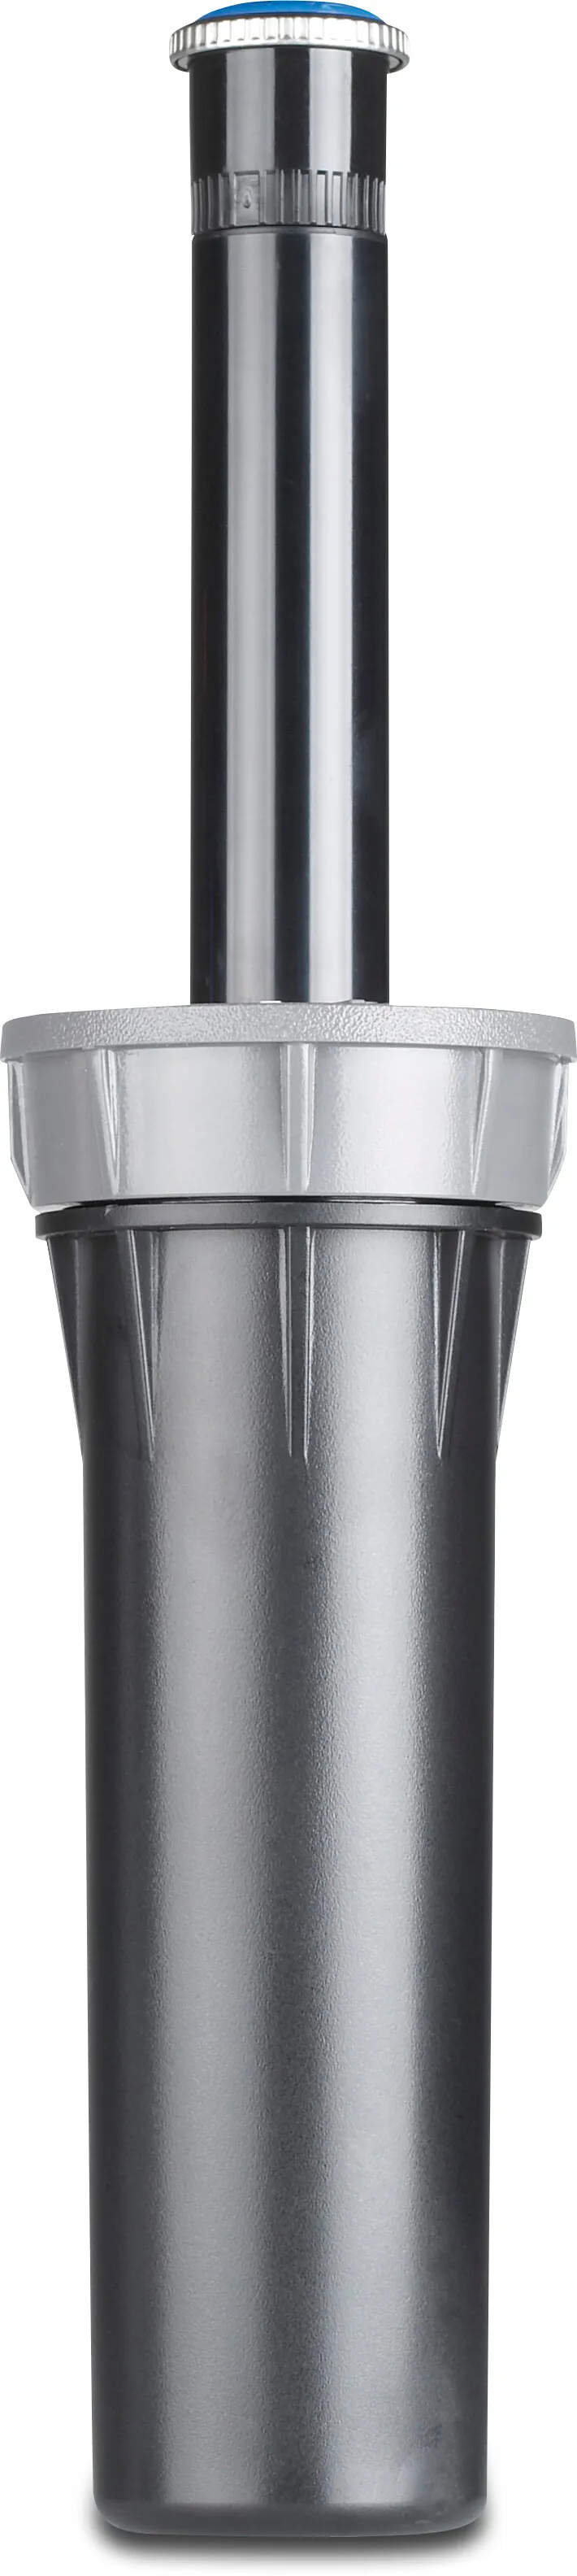 Hunter Sprinker bas plast 1/2" invändig gänga 2.1bar 40°-360° svart type Pro Spray-00-PRS30 Pressure regulated